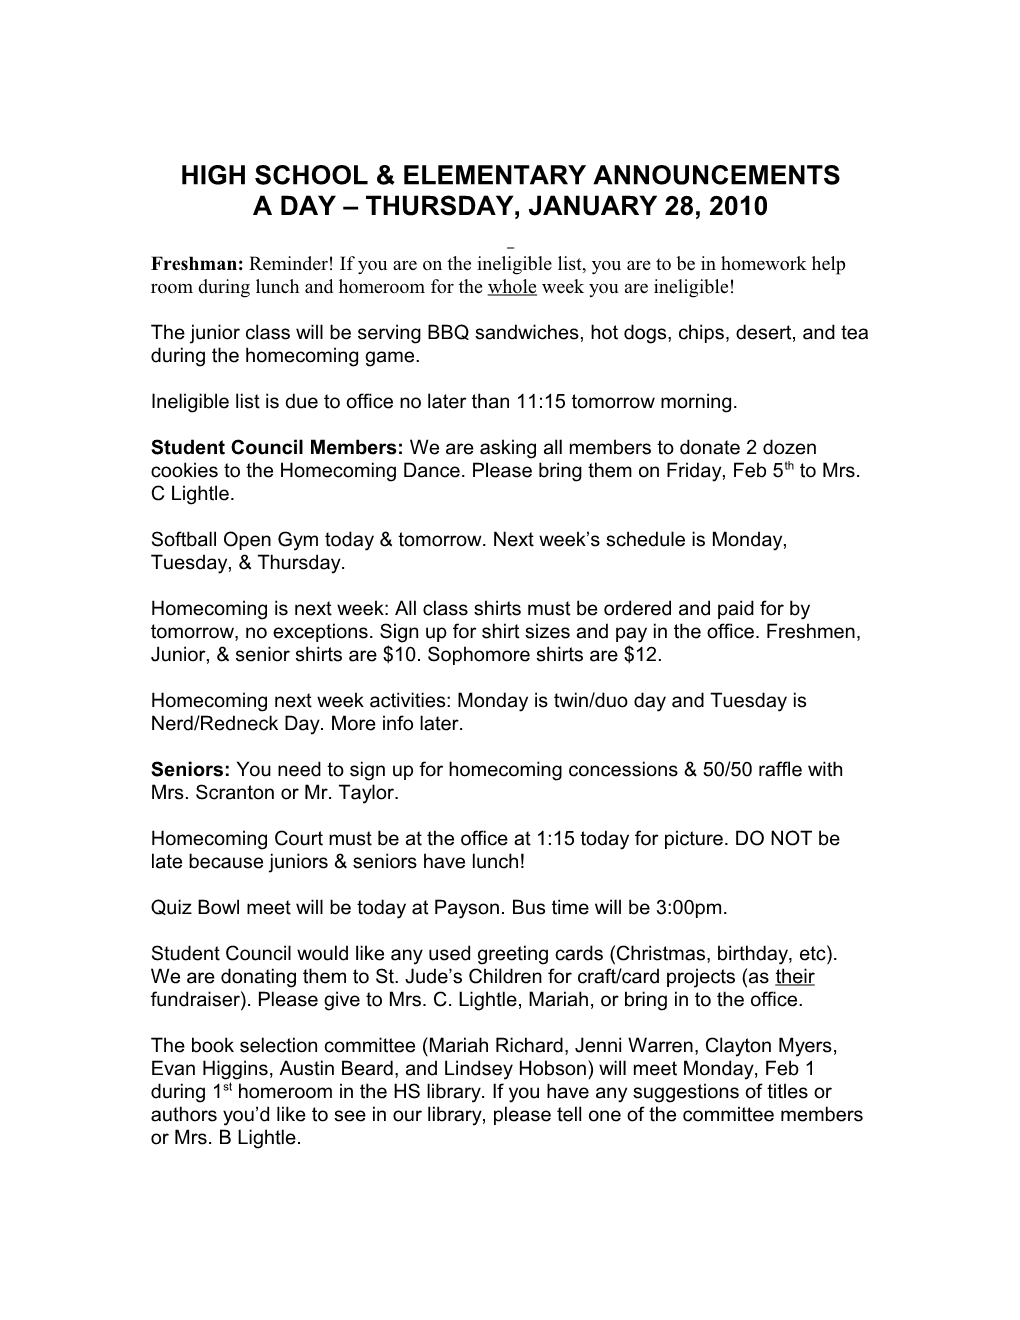 High School & Elementary Announcements